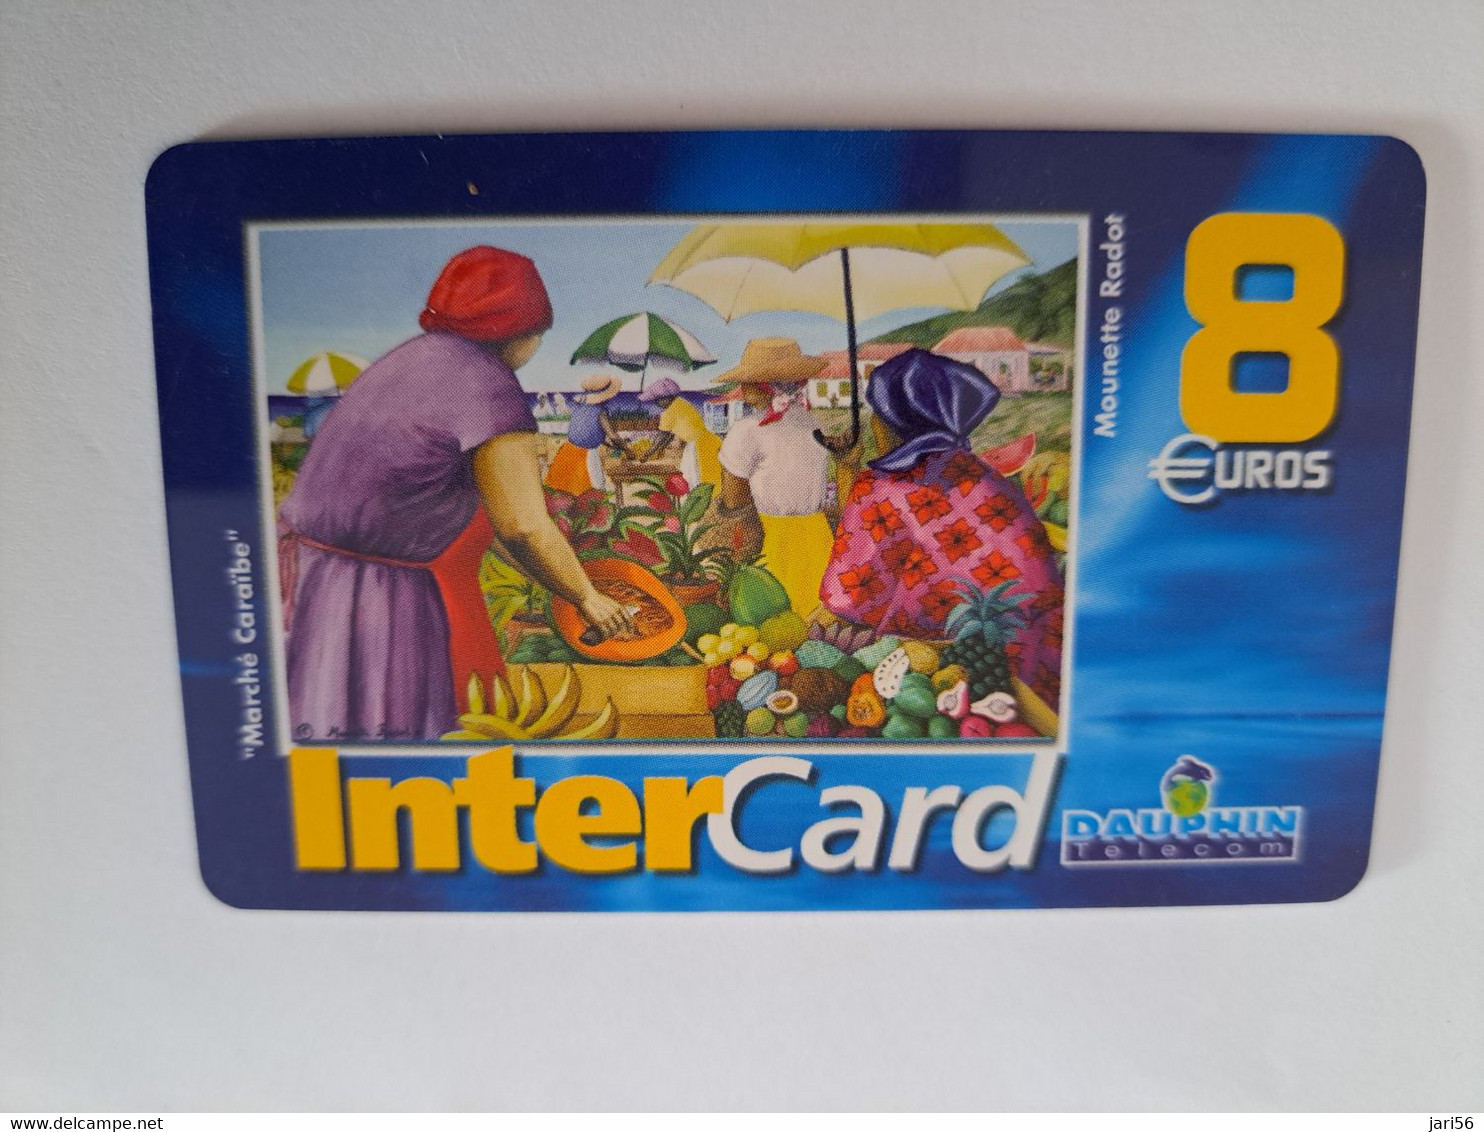 ST MARTIN / INTERCARD  8 EURO  MARCHE CARAIBE         NO 045  Fine Used Card    ** 10902** - Antilles (Françaises)